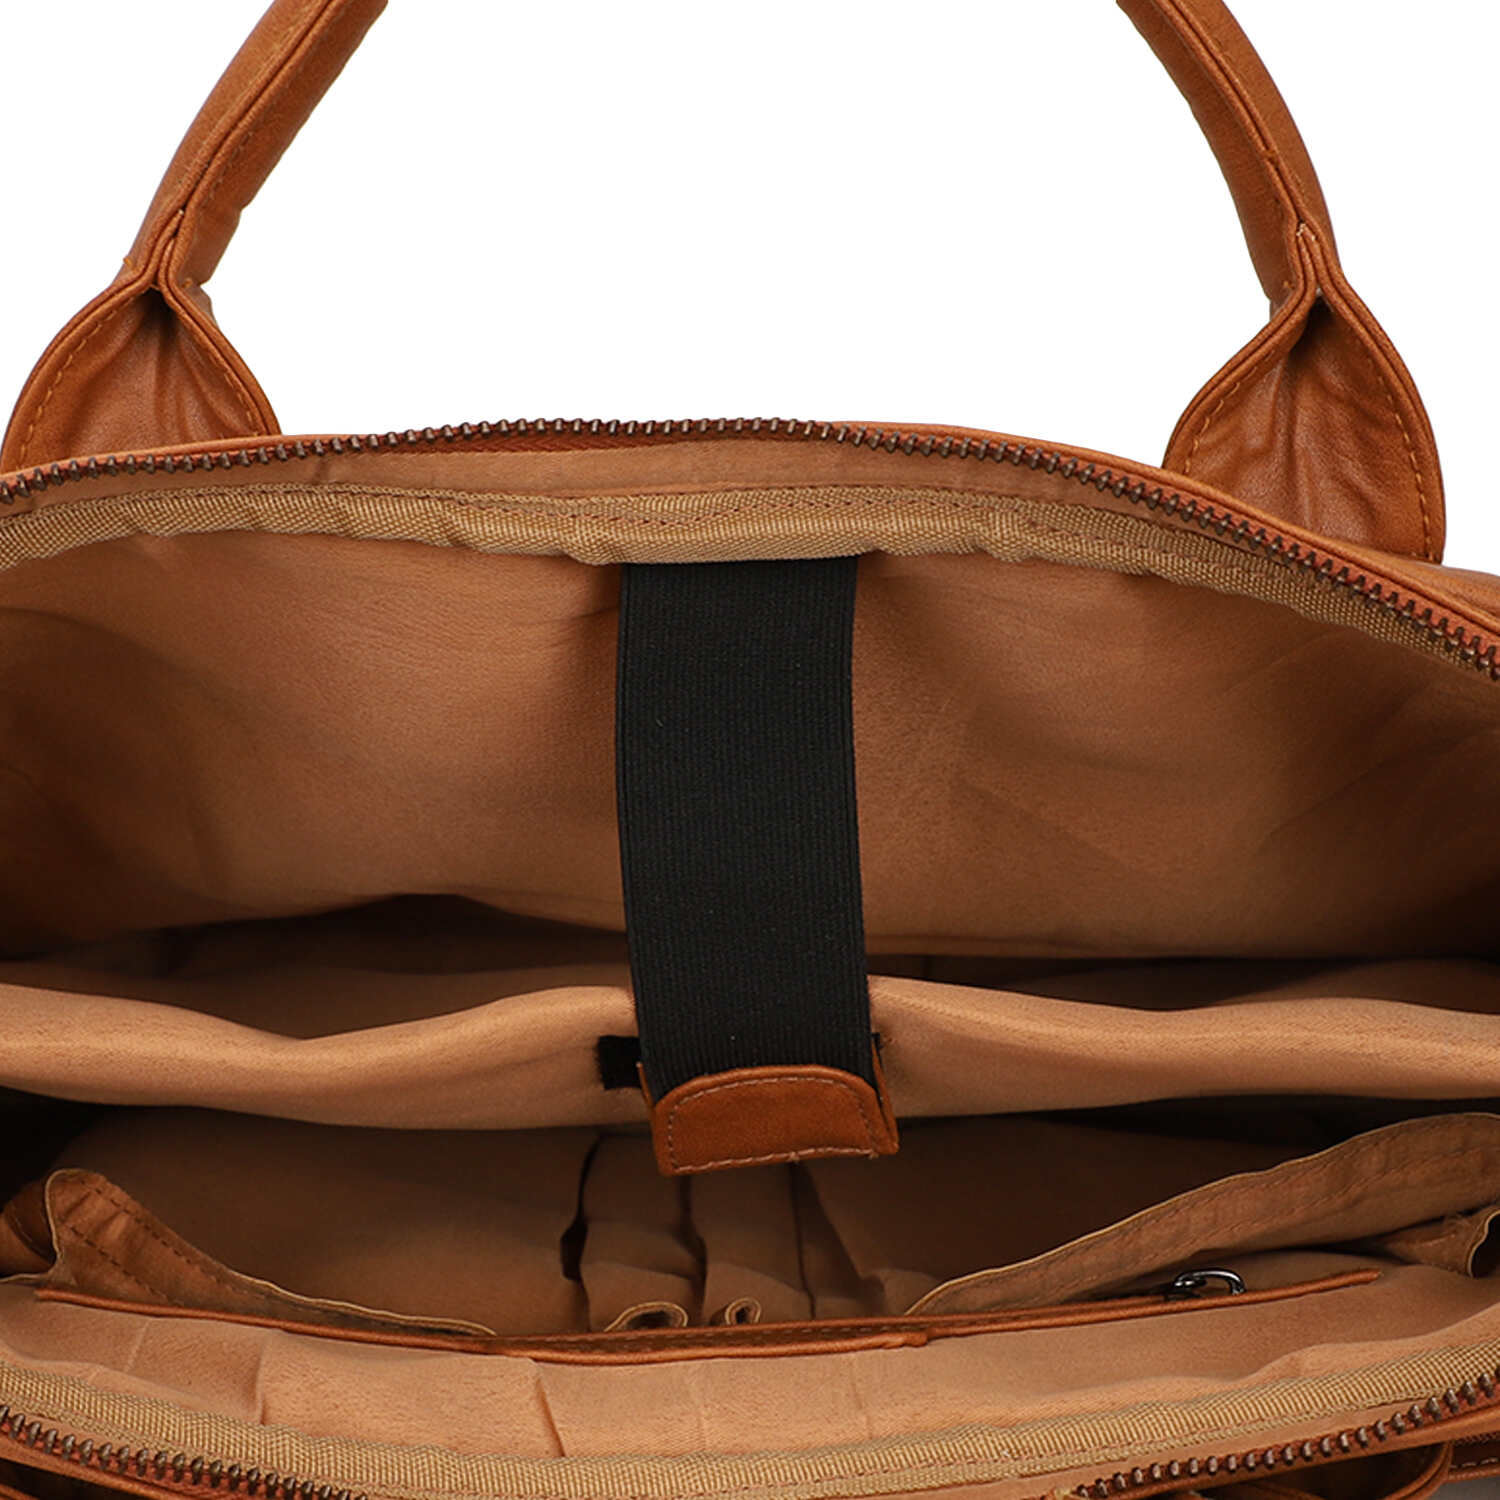 iCruze Elite Slim 15 inch Messenger Bag Tan - iCruze